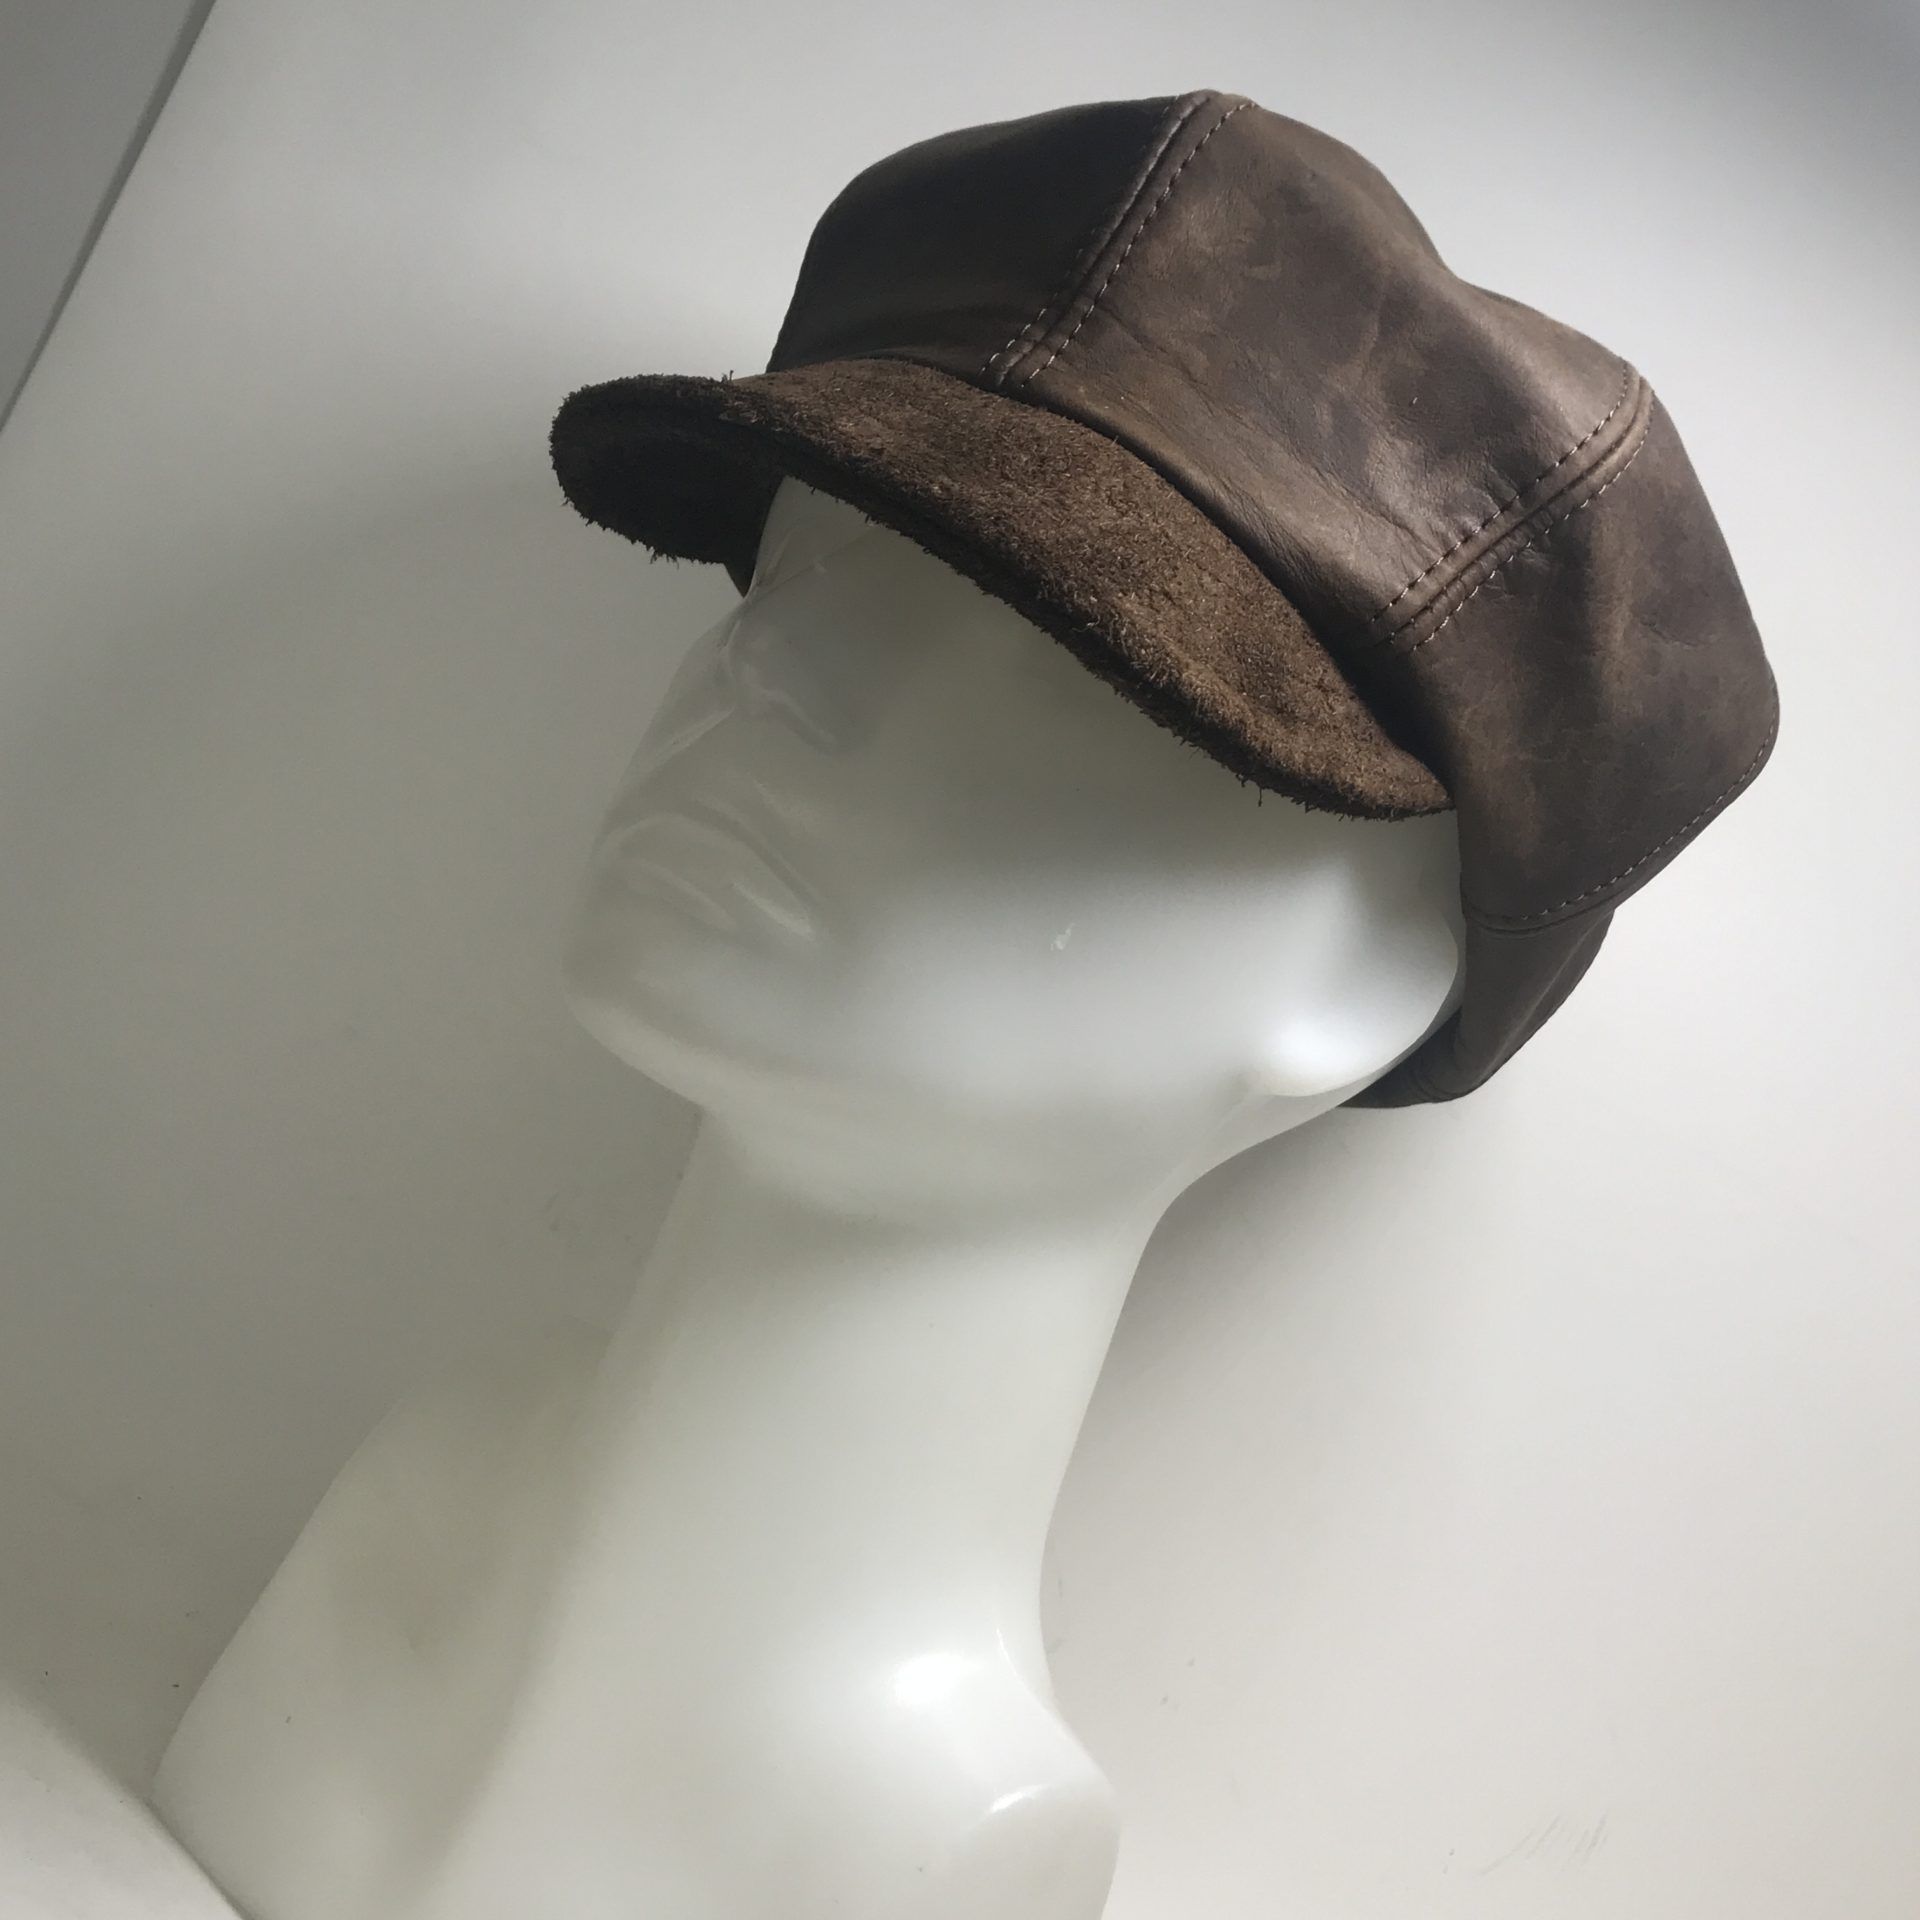 8 Piece Cap Distressed Brown Leather/Suede Peak Brown – Medium 56/57cm